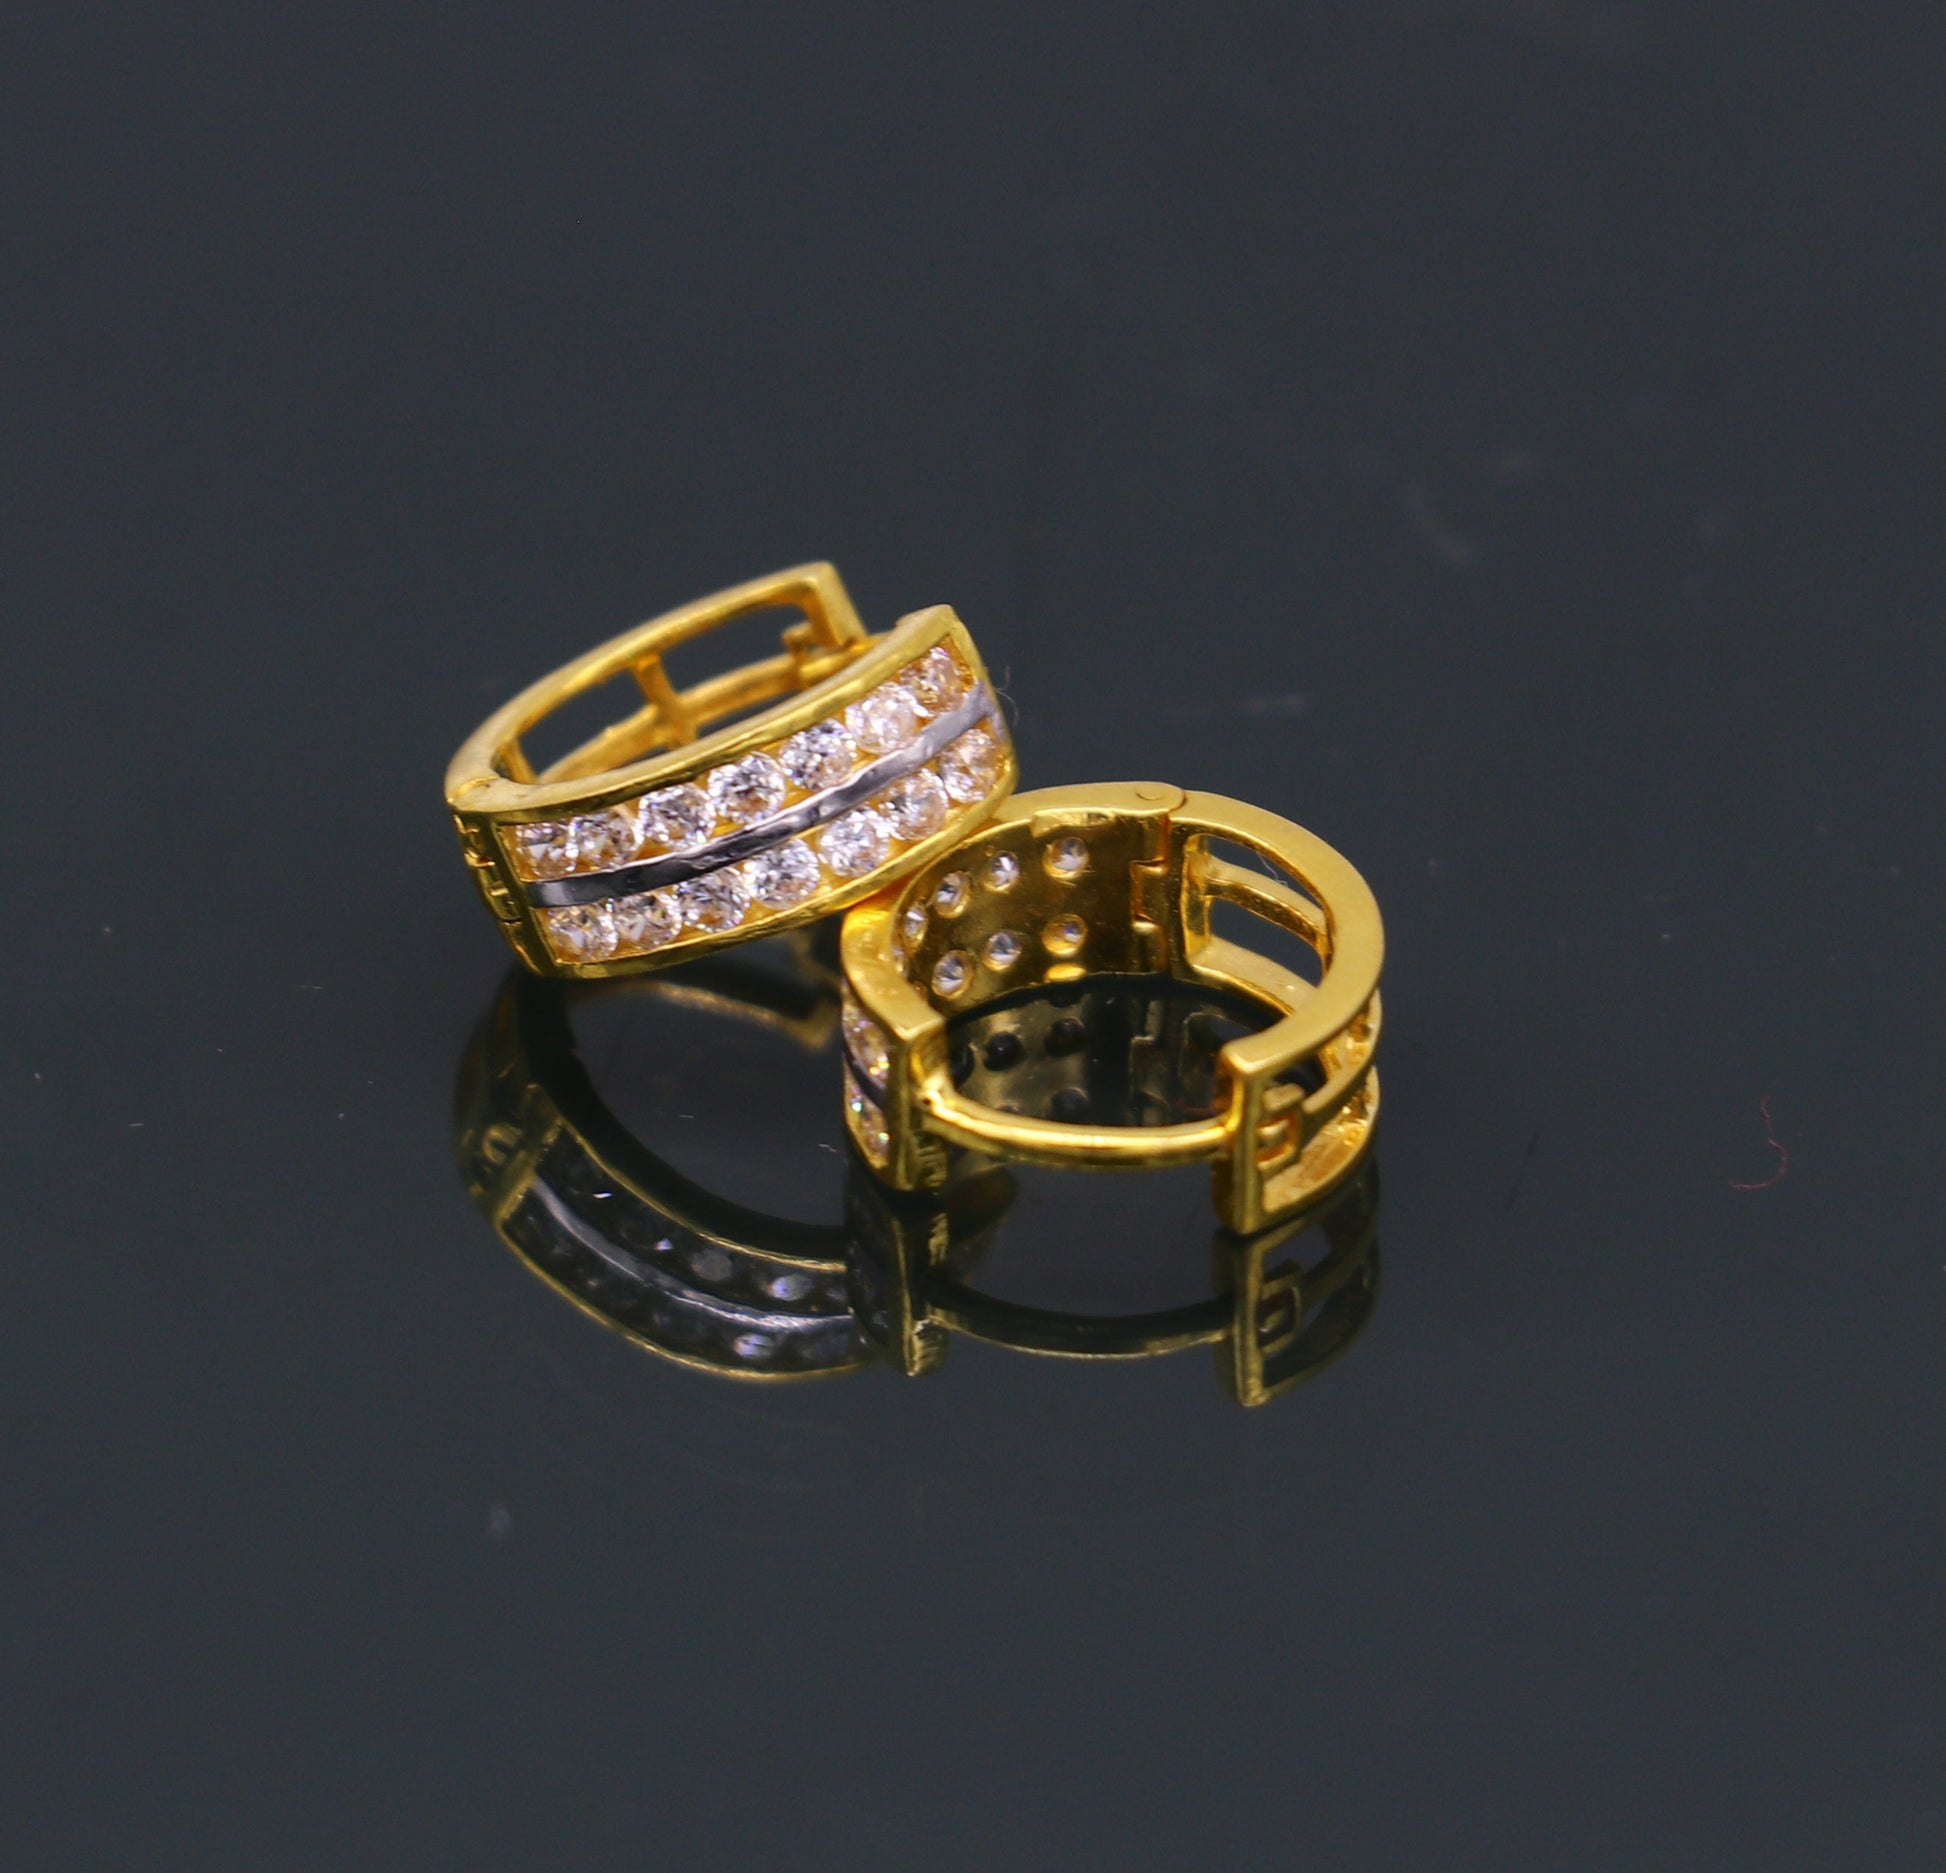 Genuine 18 kt fine yellow gold gorgeous hoops earring bali, gorgeous customized hook earring bali ear plug unisex dainty jewelry ho72 - TRIBAL ORNAMENTS